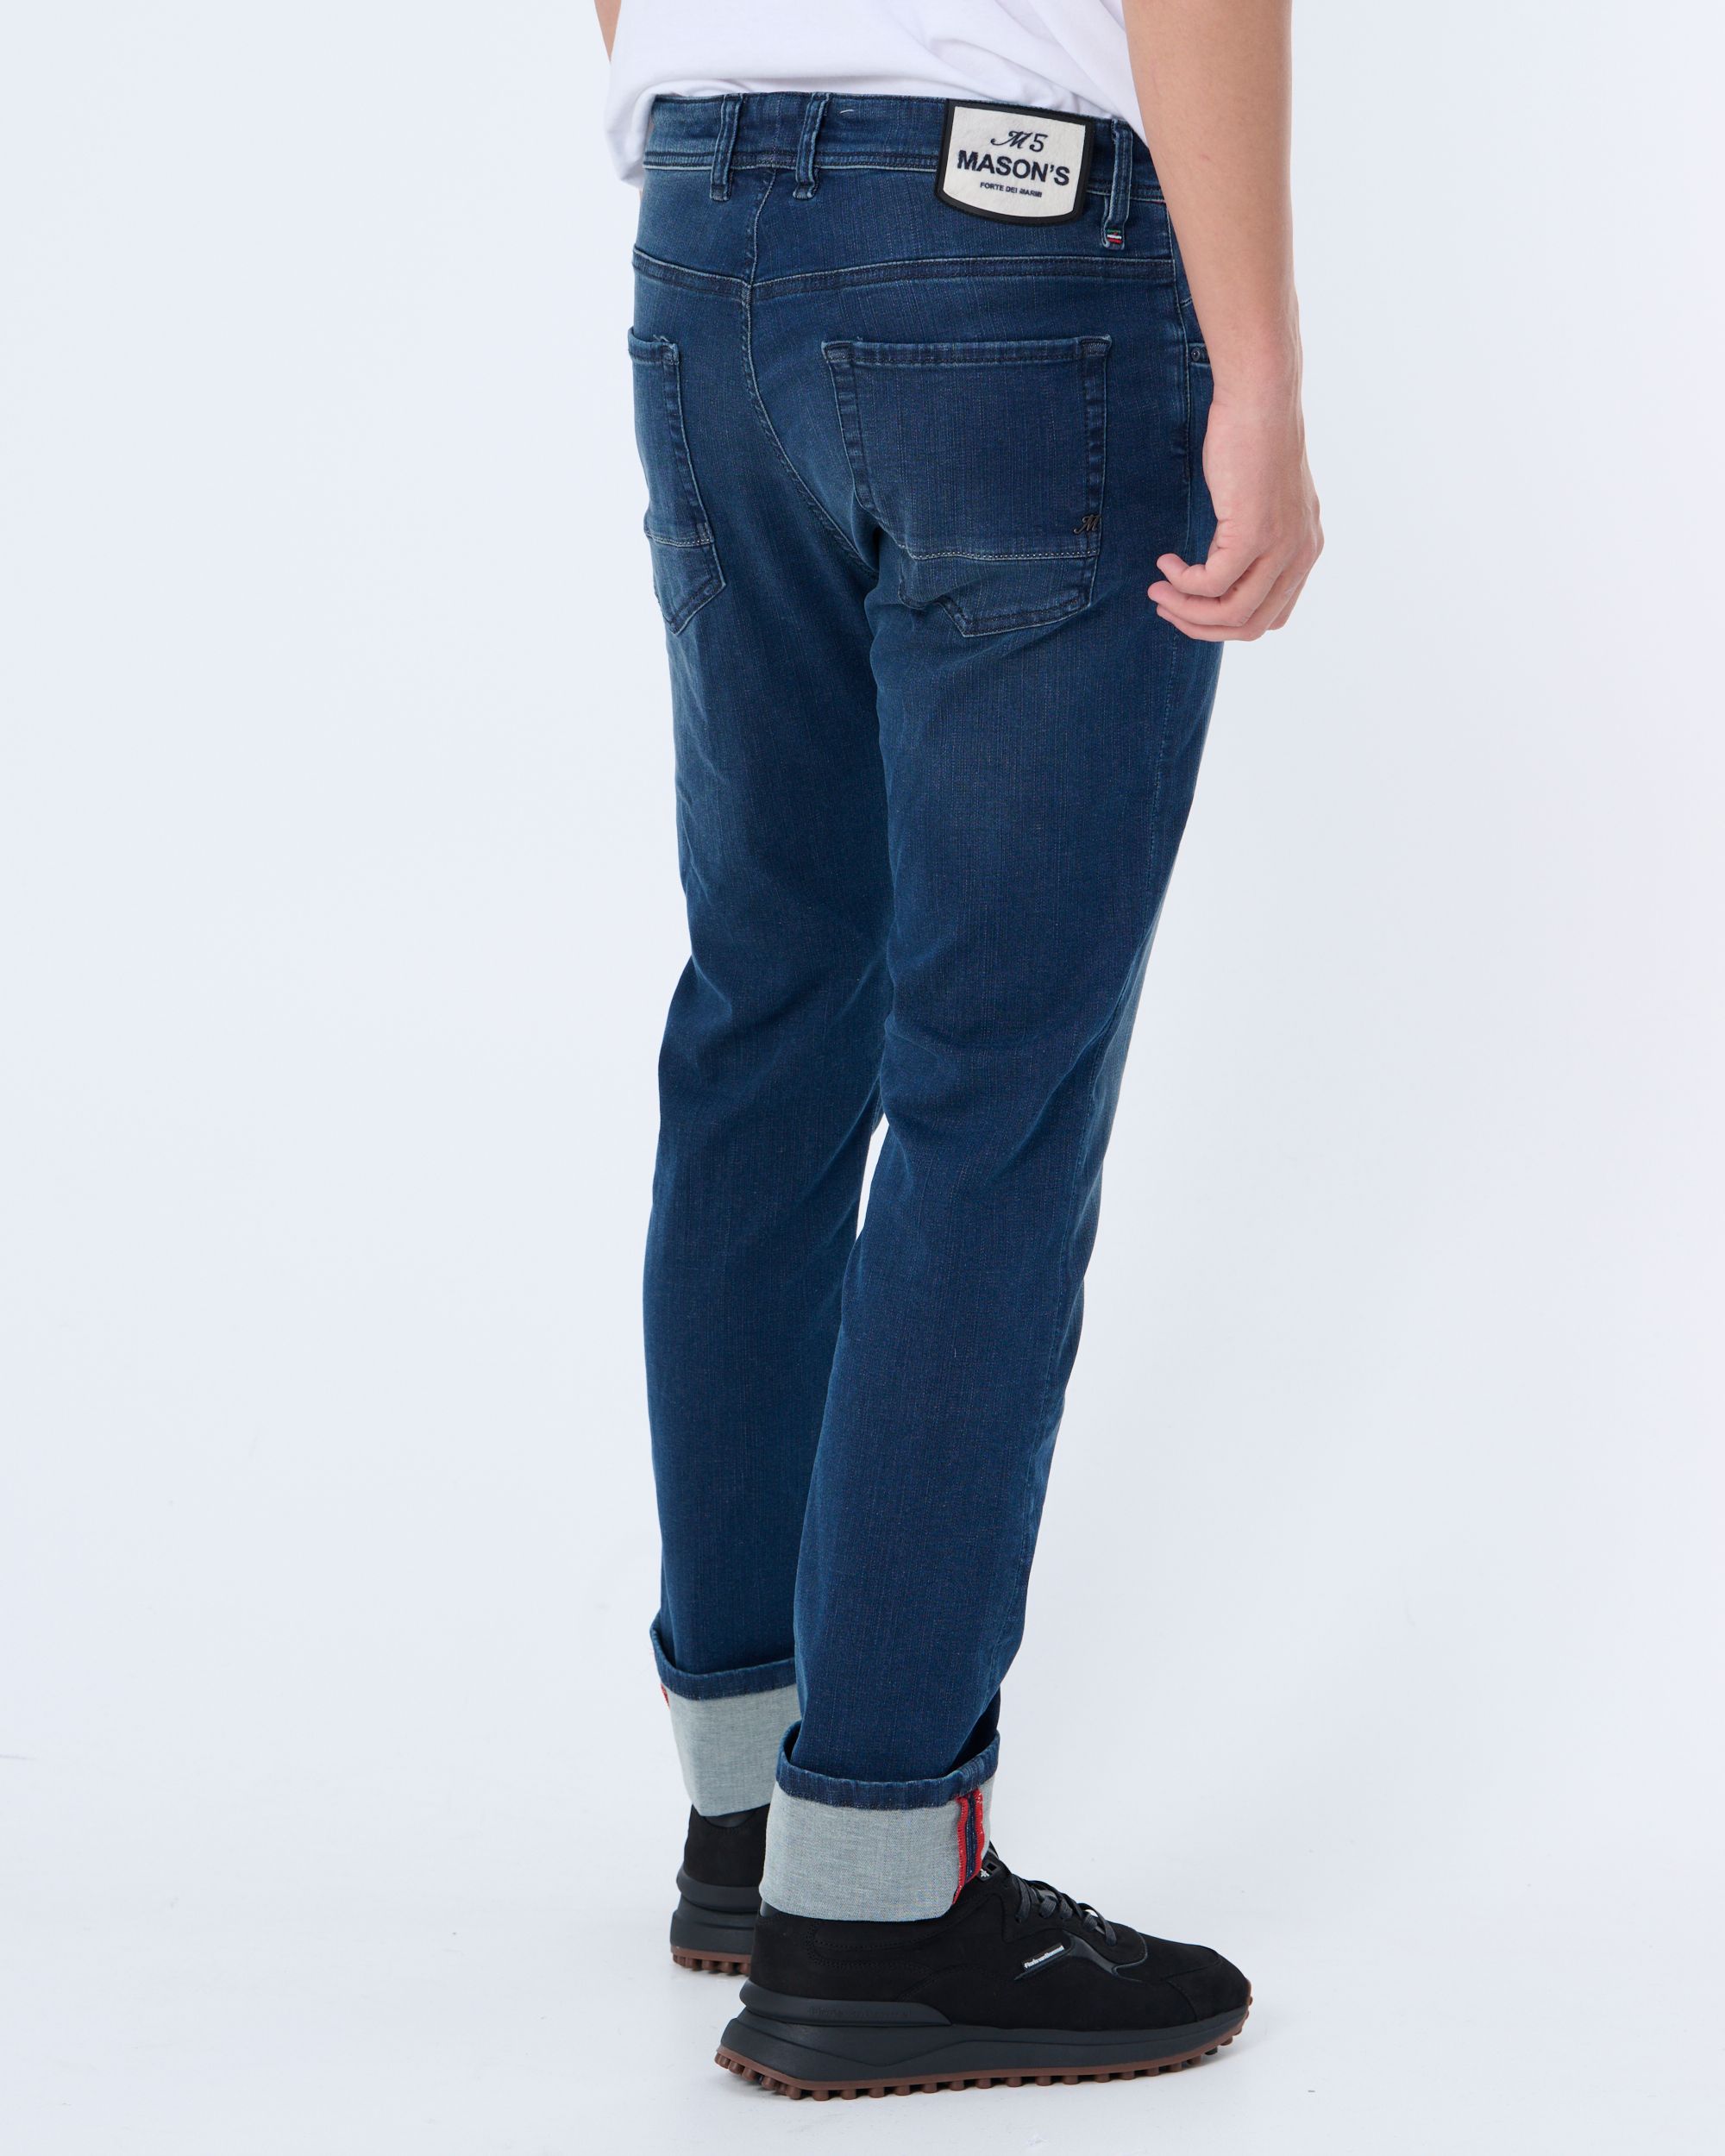 Mason's Jeans Blauw 088146-001-31